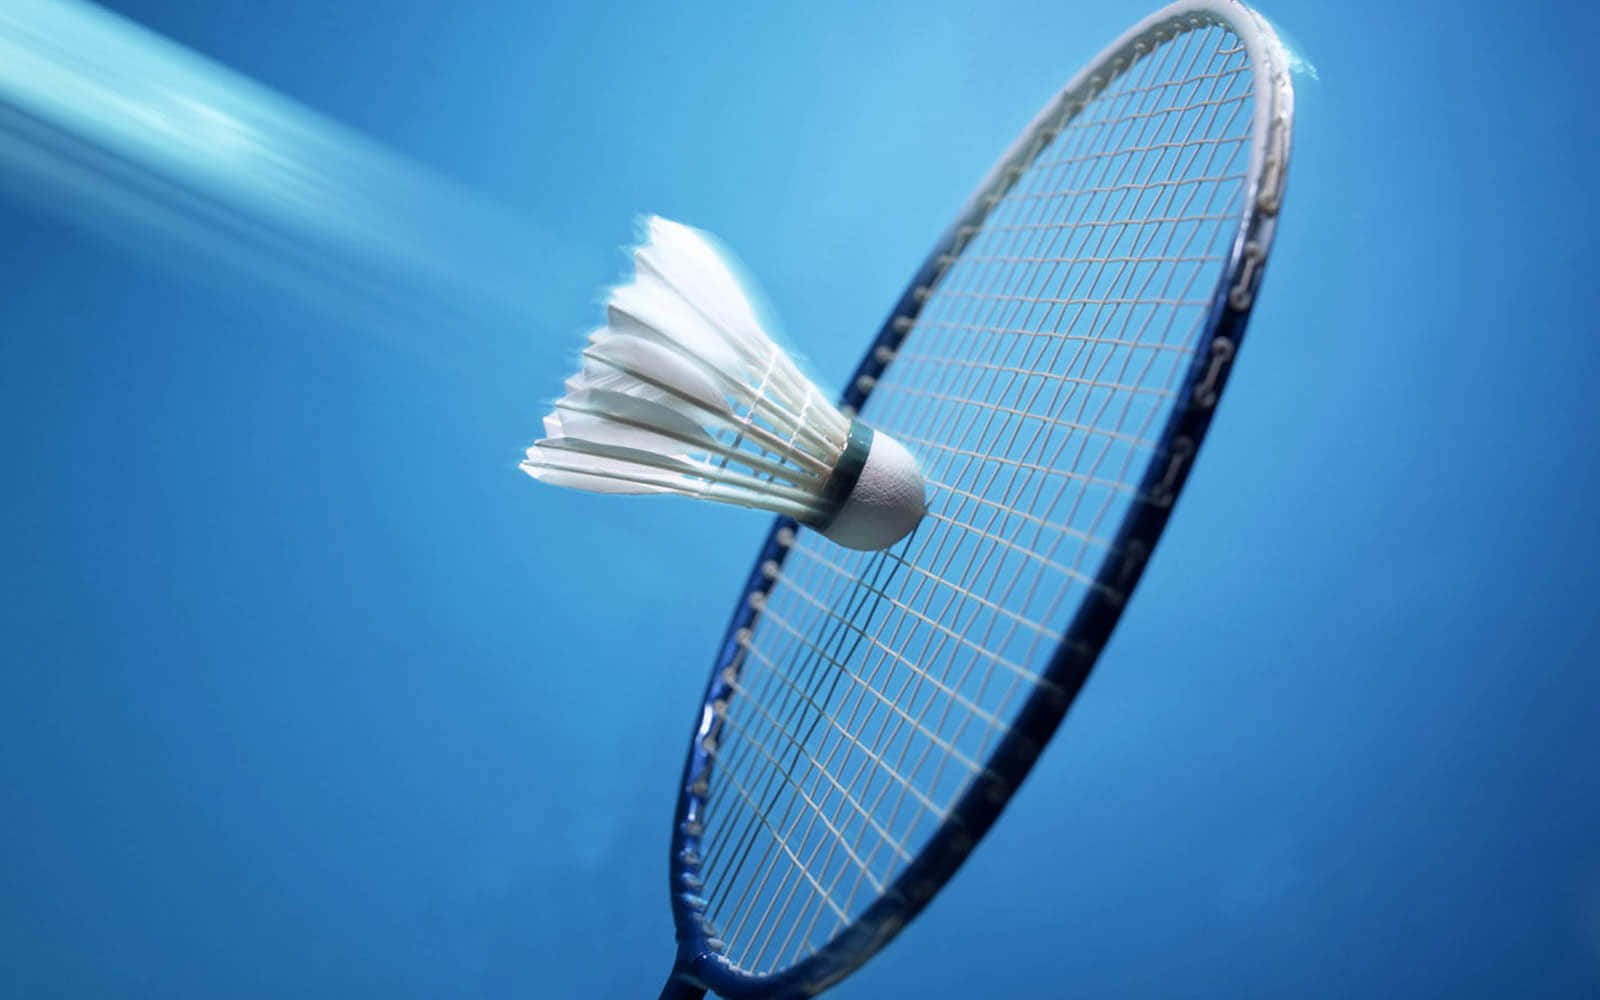 An Intense Game of Badminton